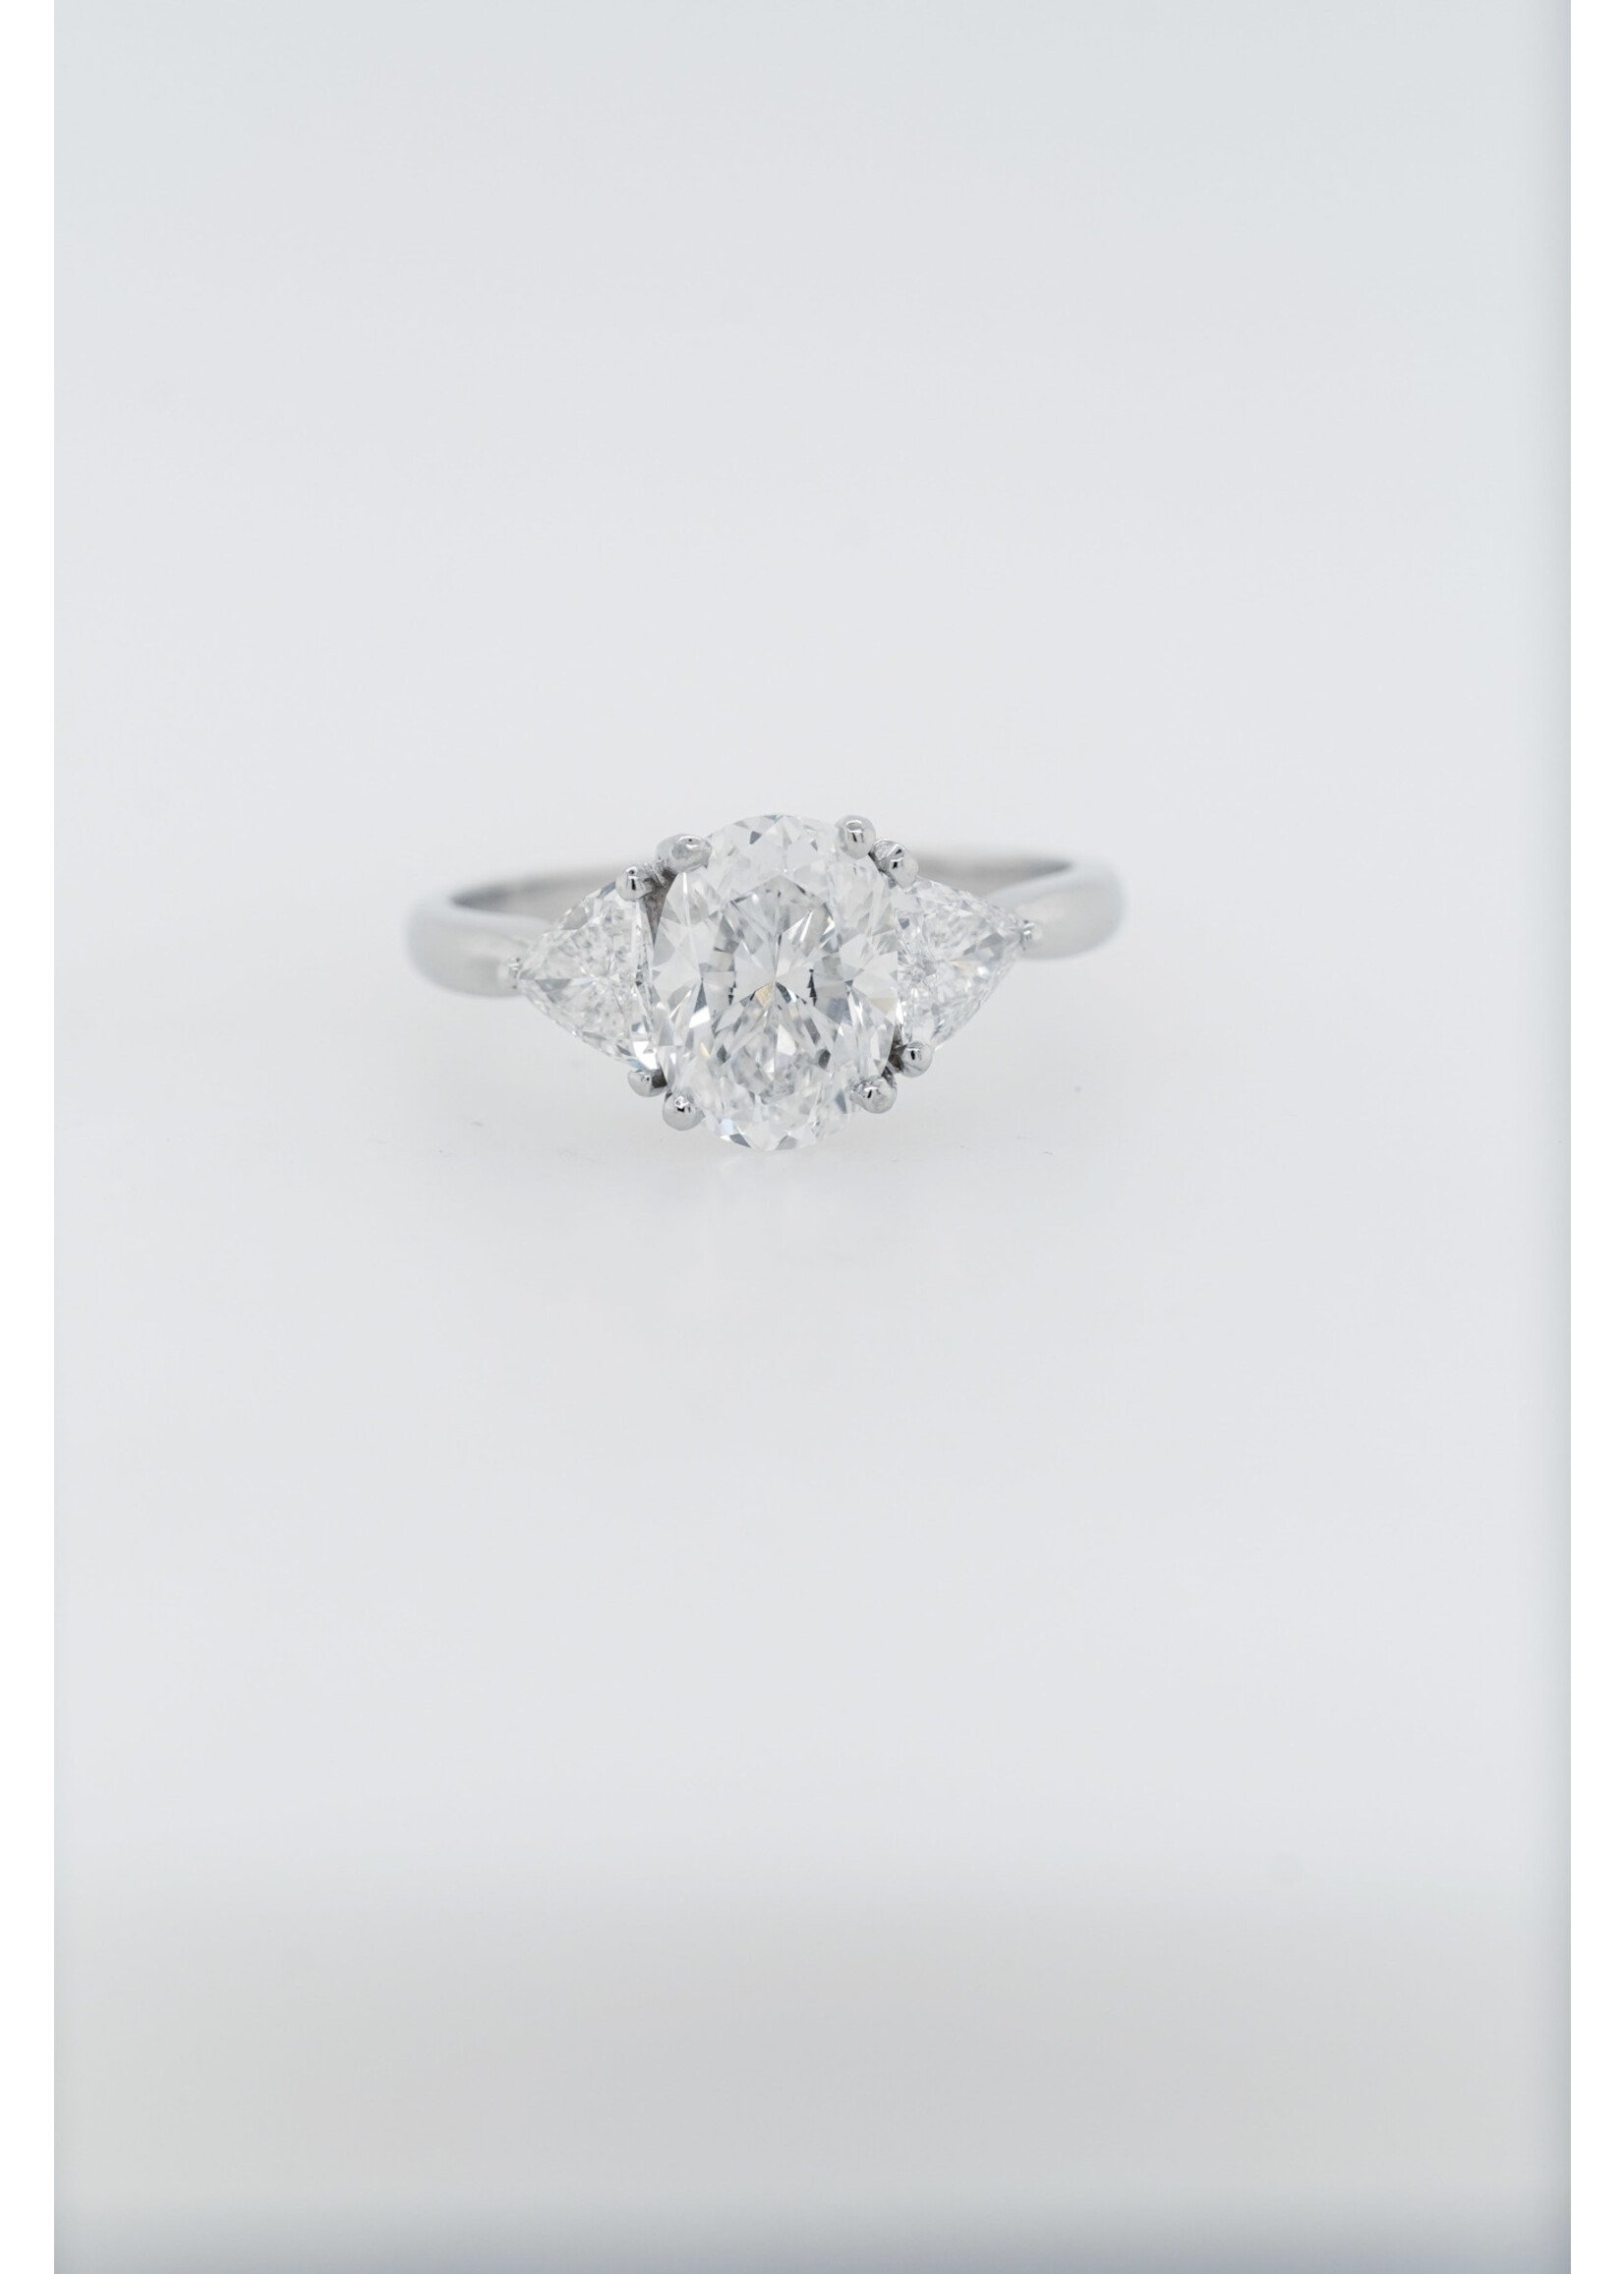 Platinum 5.29g 3.02ctw (2.24ctr) H/SI1 Oval Diamond 3-Stone Engagement Ring (size 7.5)